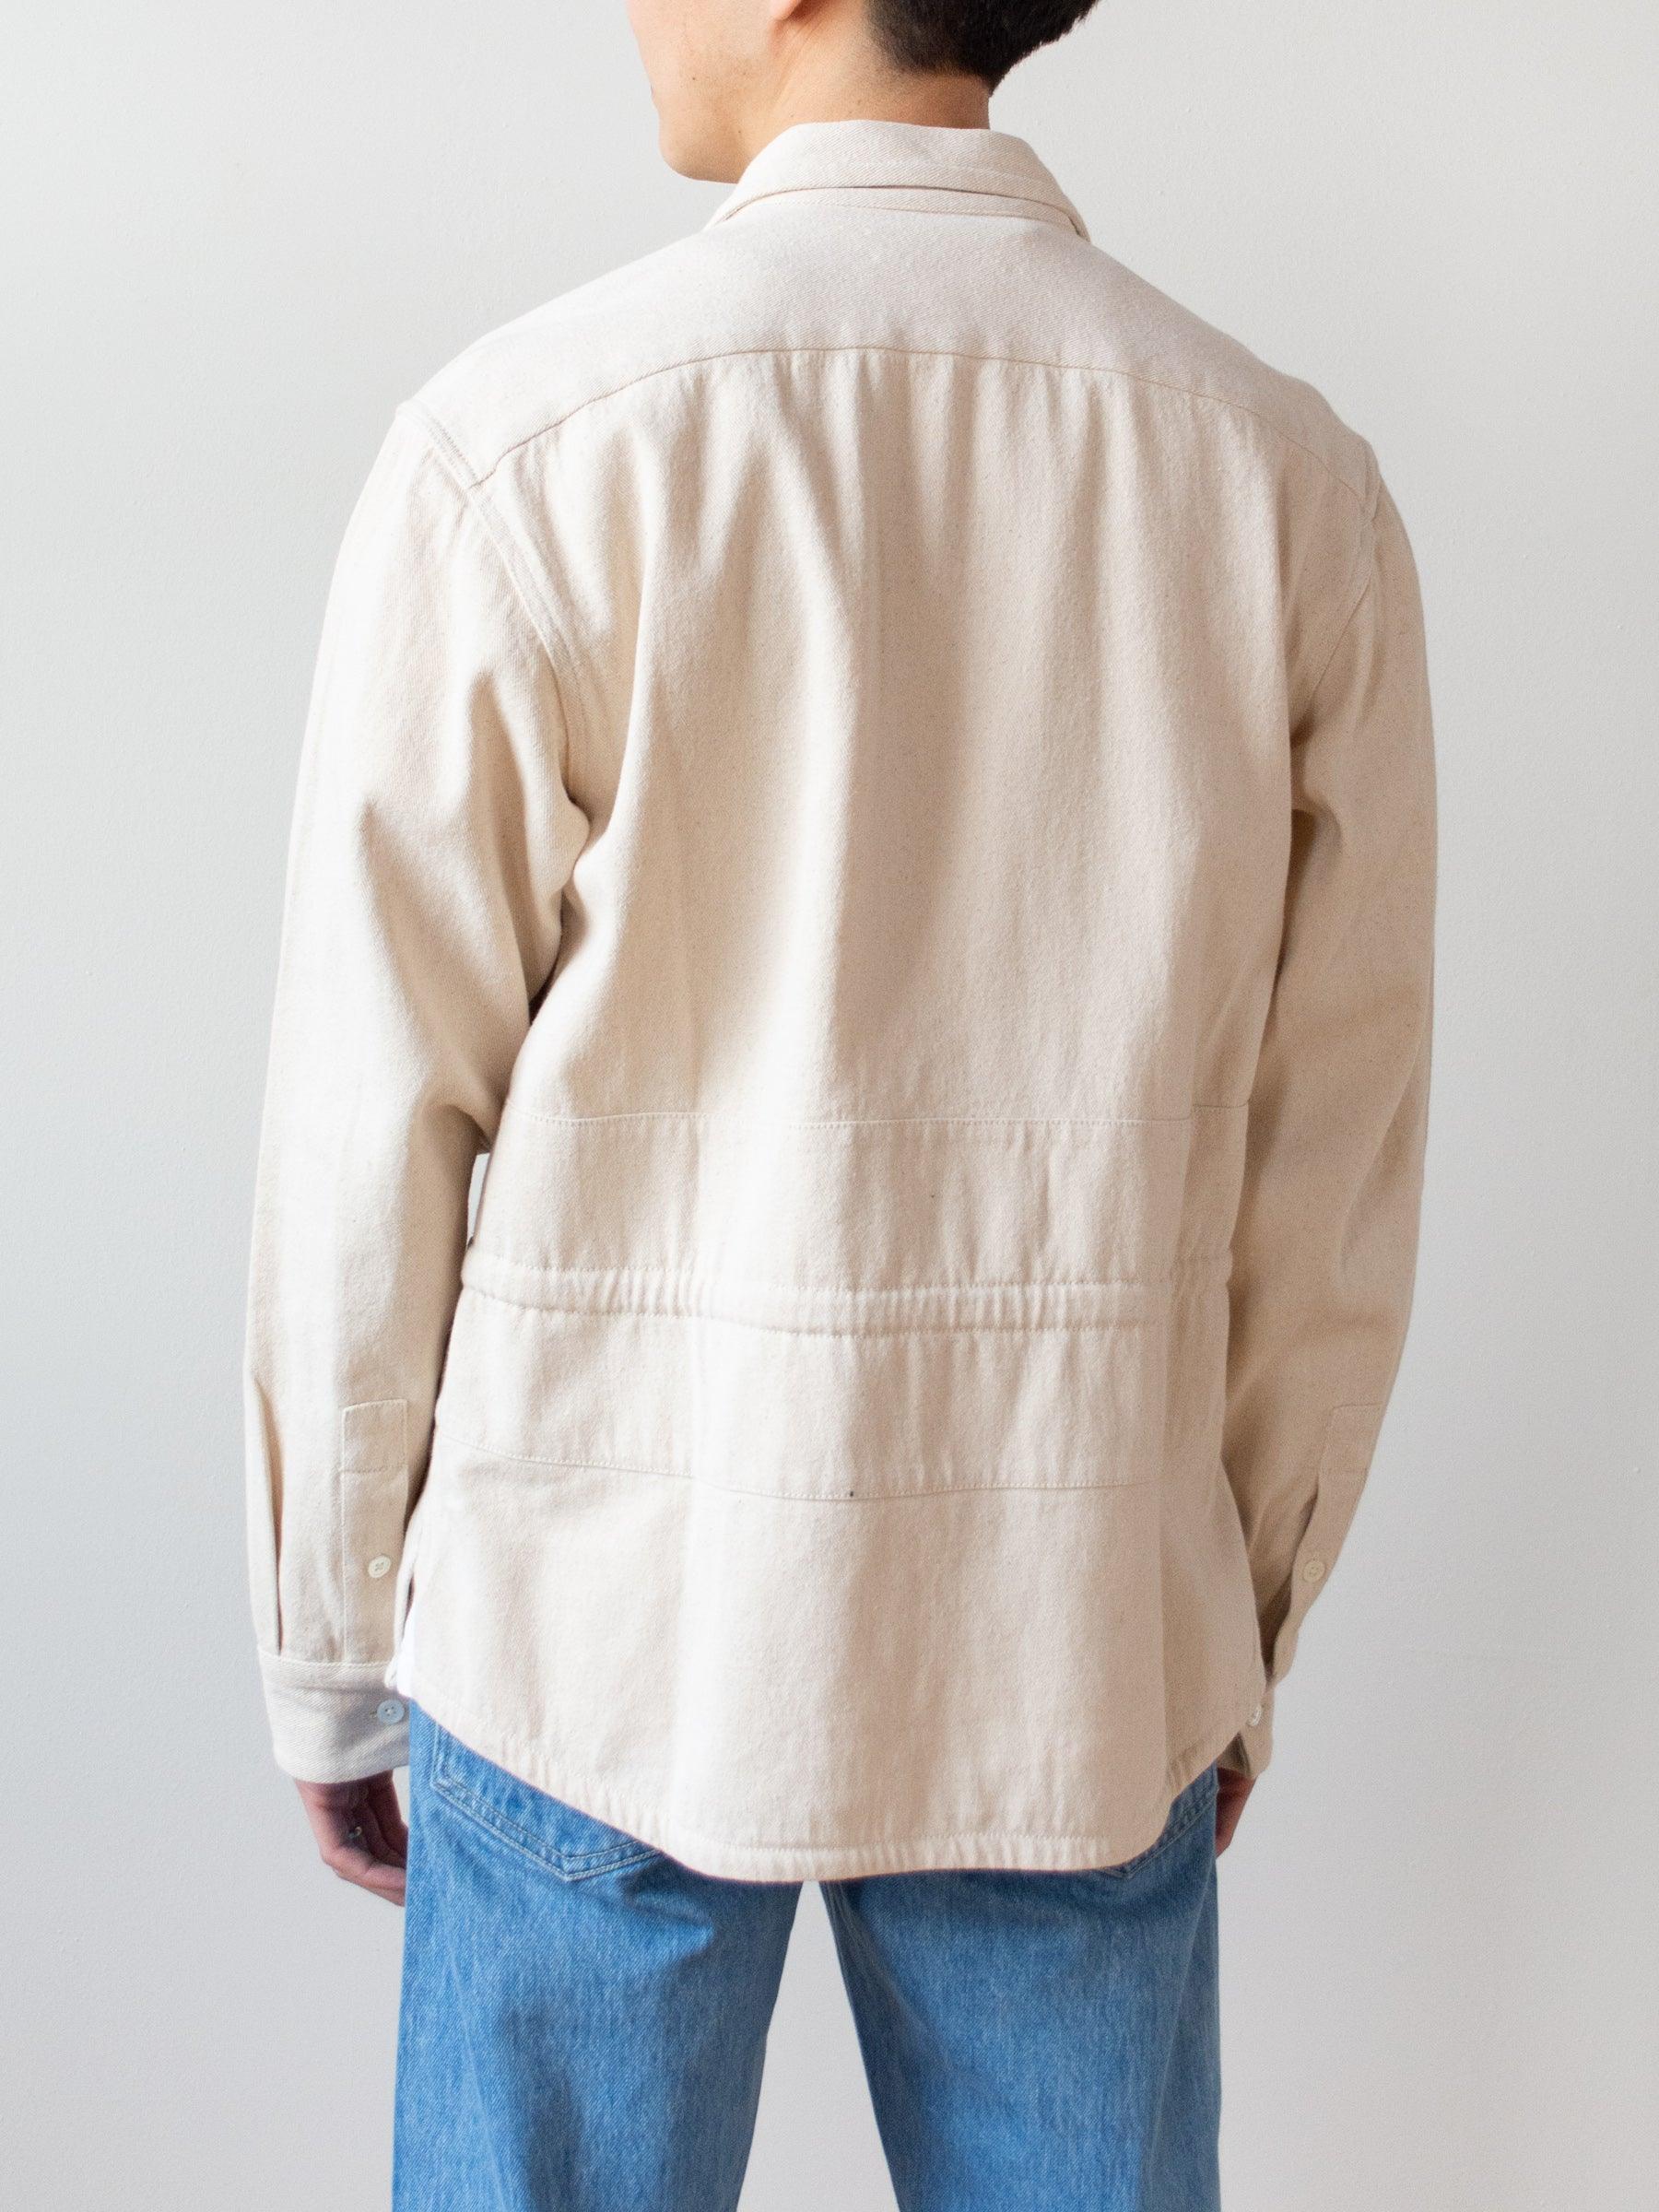 Namu Shop - Jan Machenhauer Coi Shirt - Natural Cotton Heavy Twill